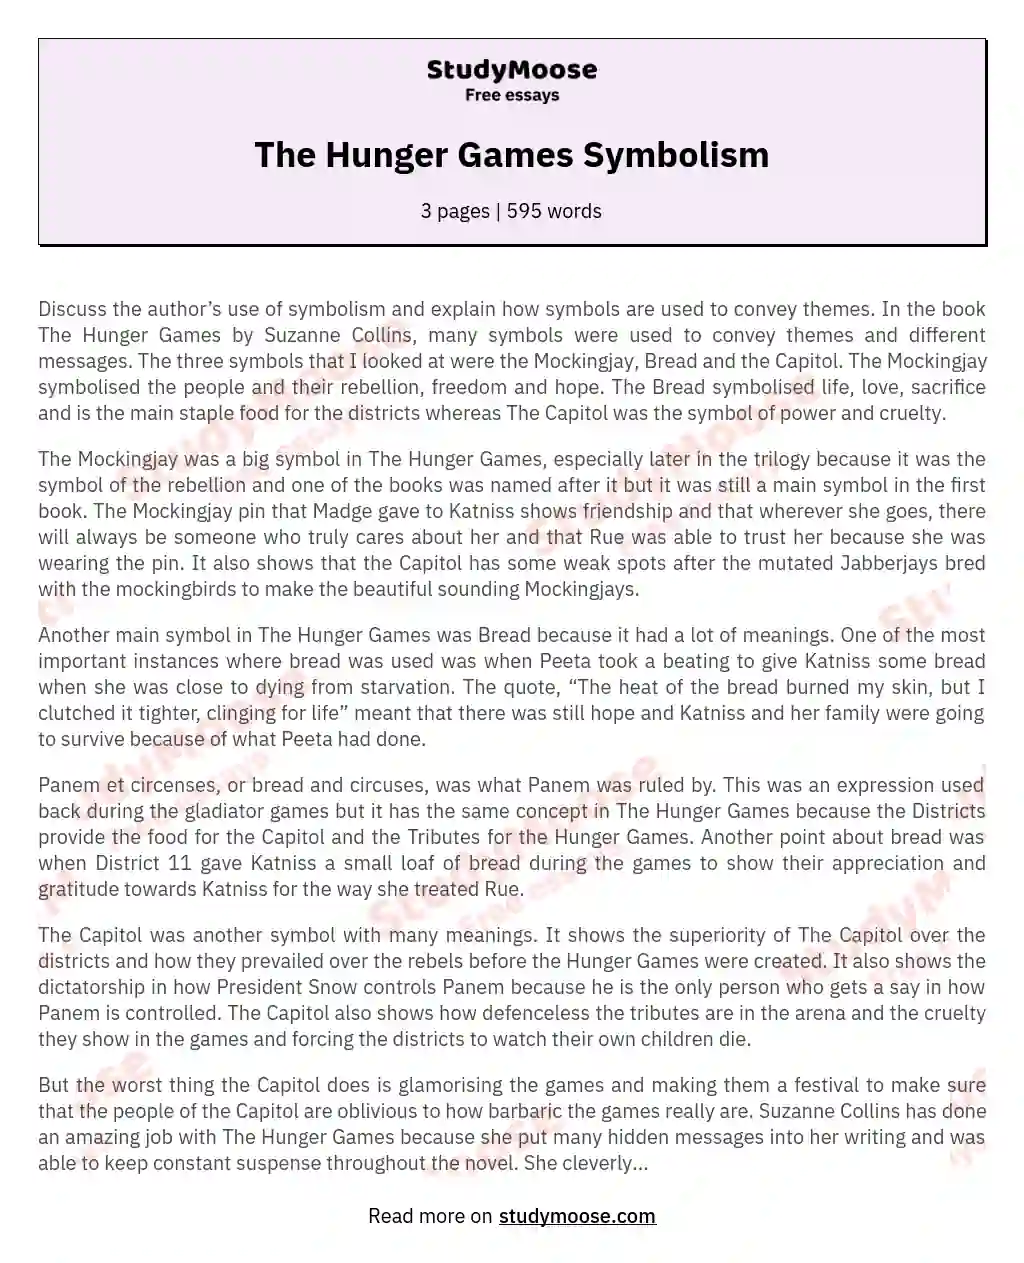 The Hunger Games Symbolism essay